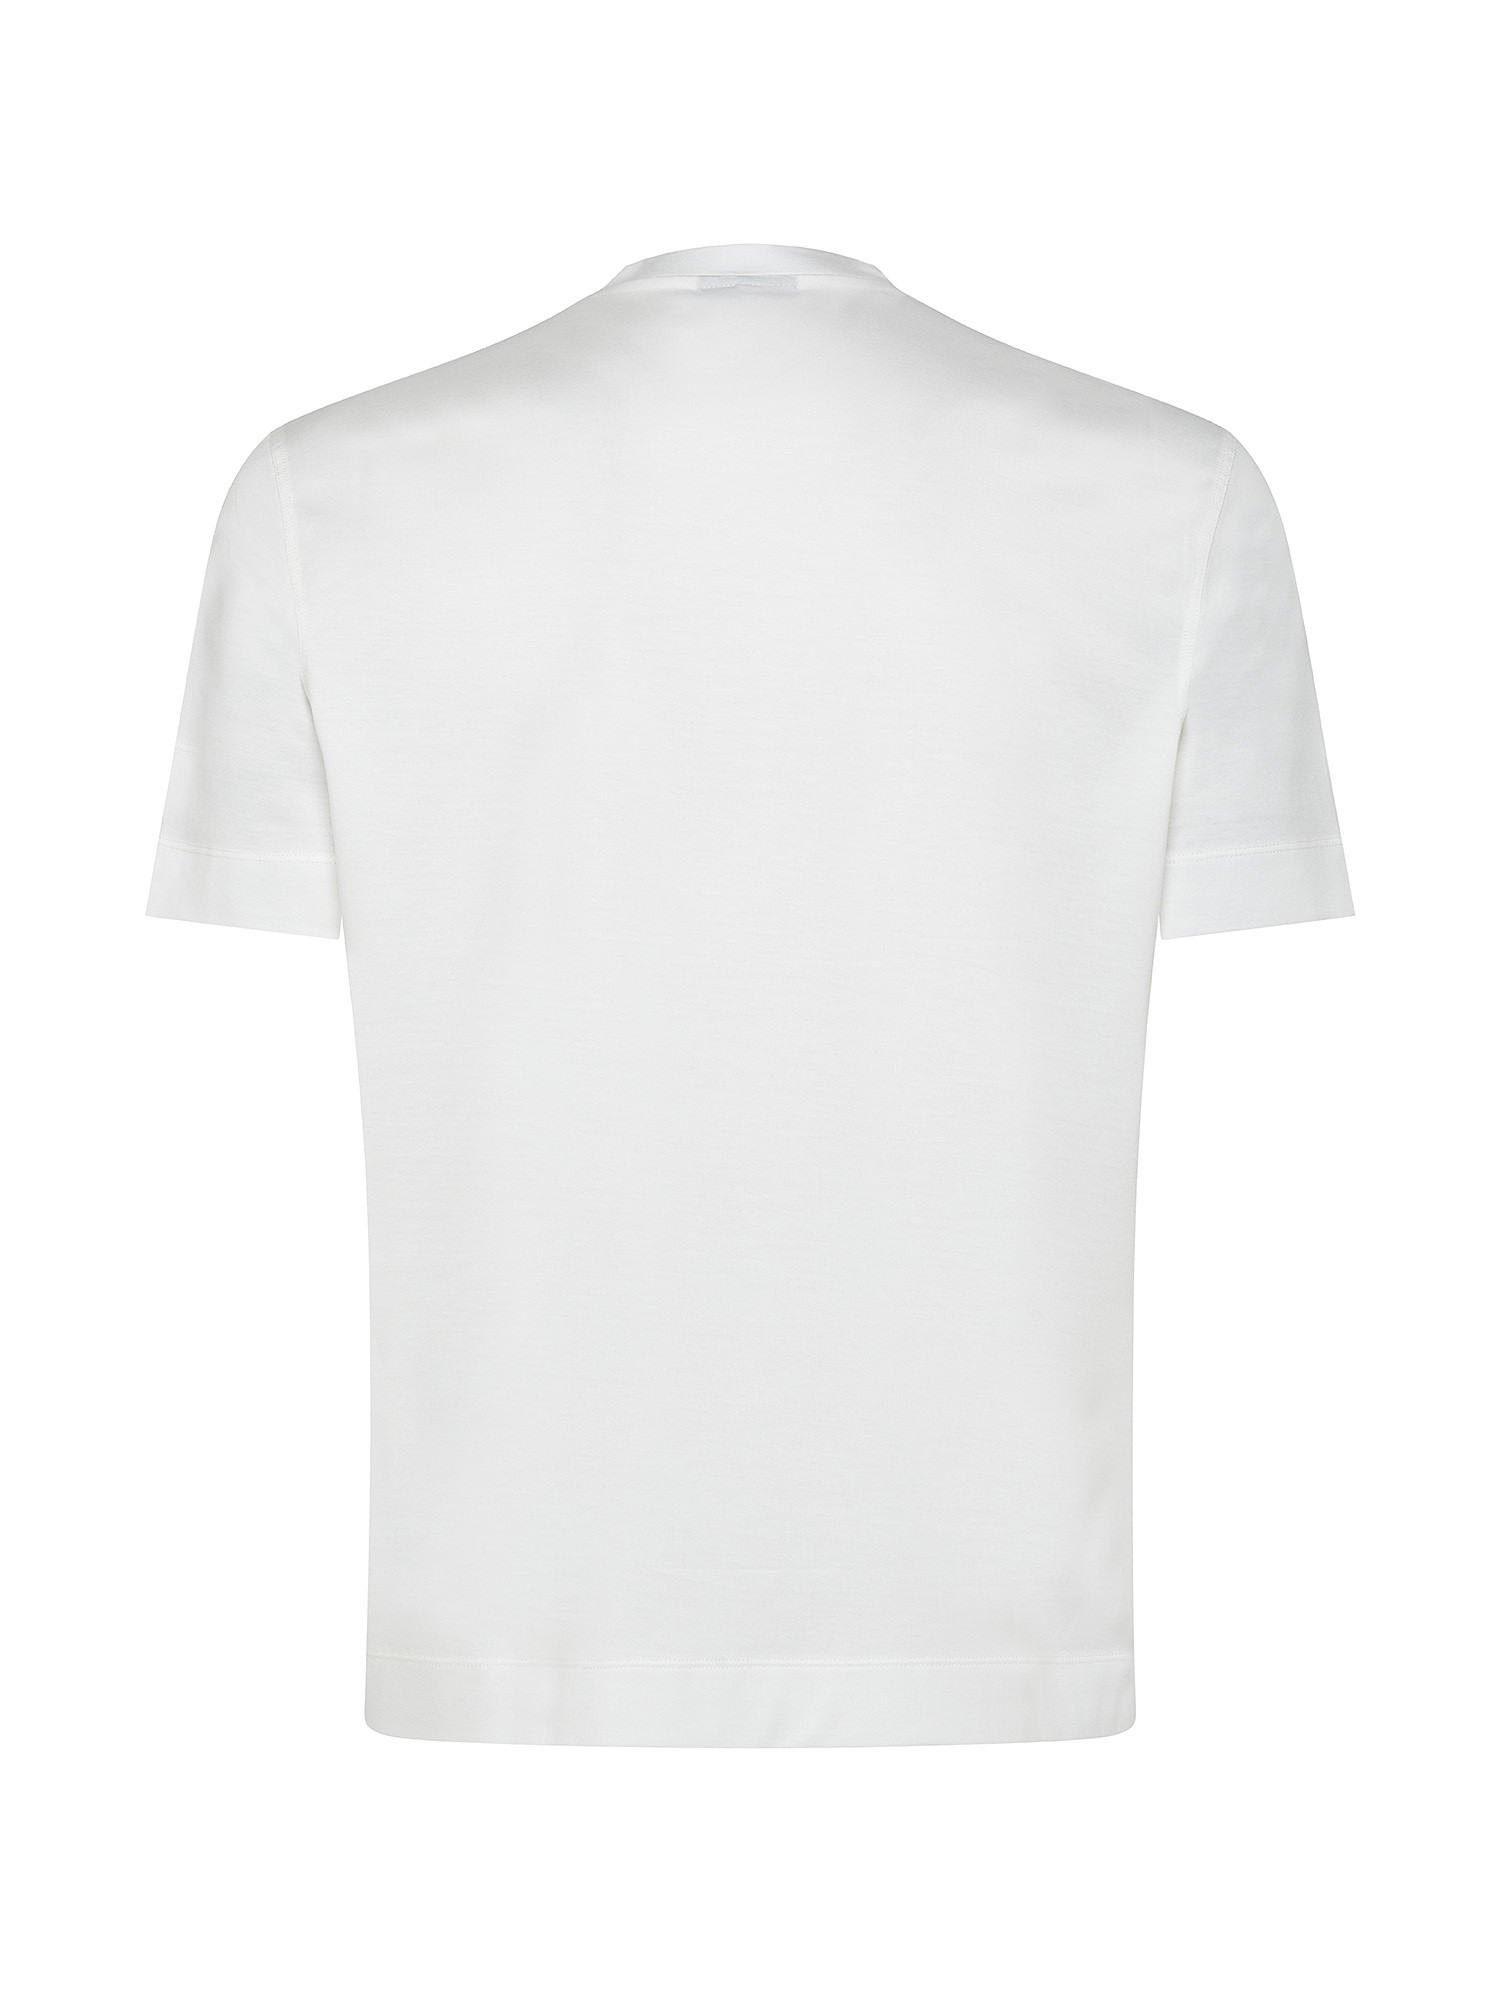 Emporio Armani - T-shirt con logo ricamato, Bianco, large image number 1